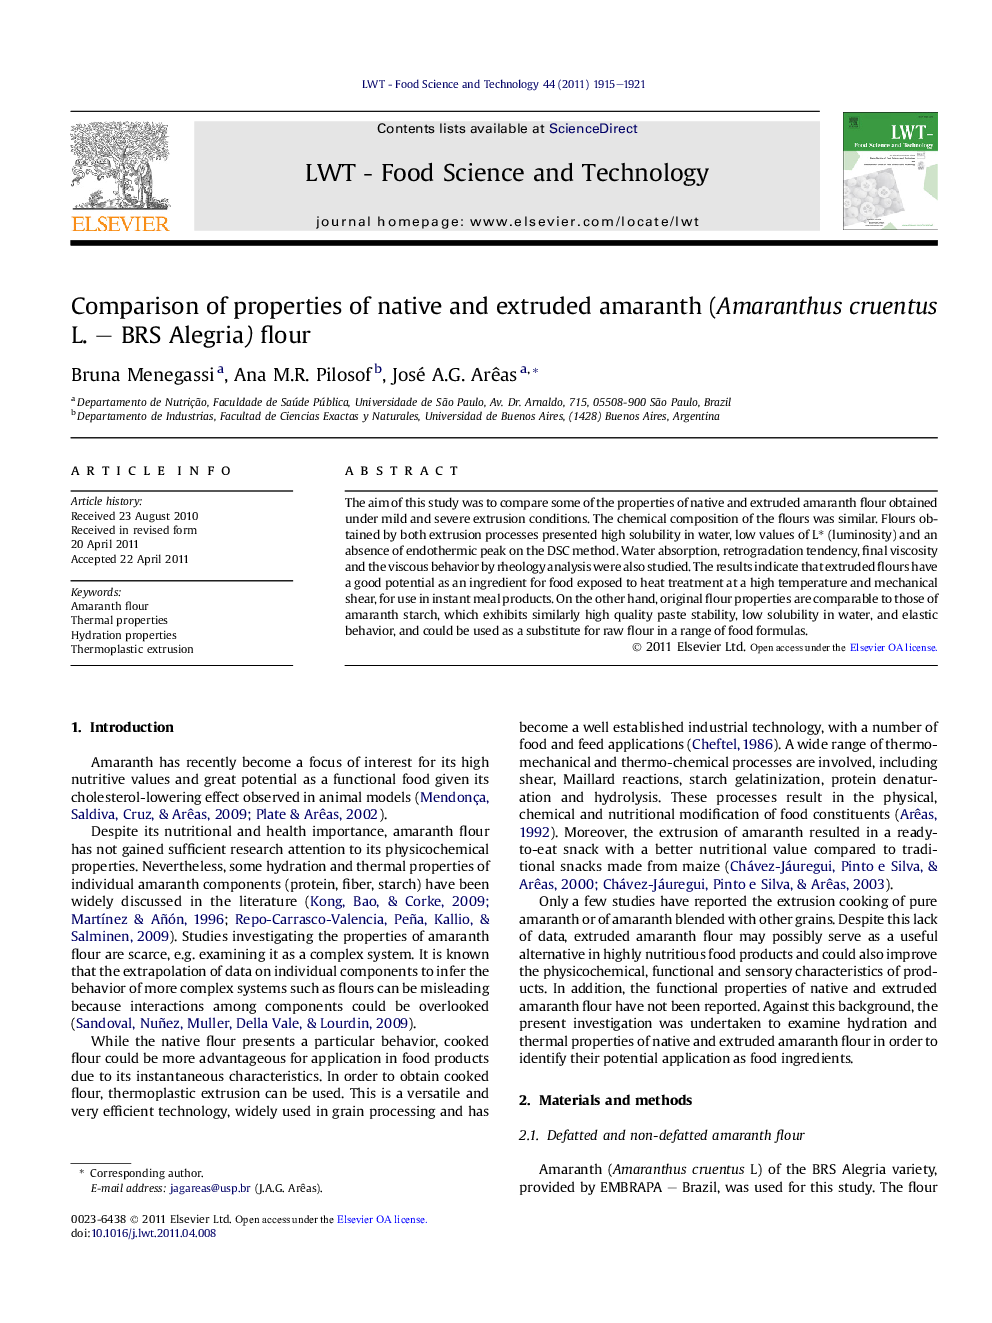 Comparison of properties of native and extruded amaranth (Amaranthus cruentus L. - BRS Alegria) flour